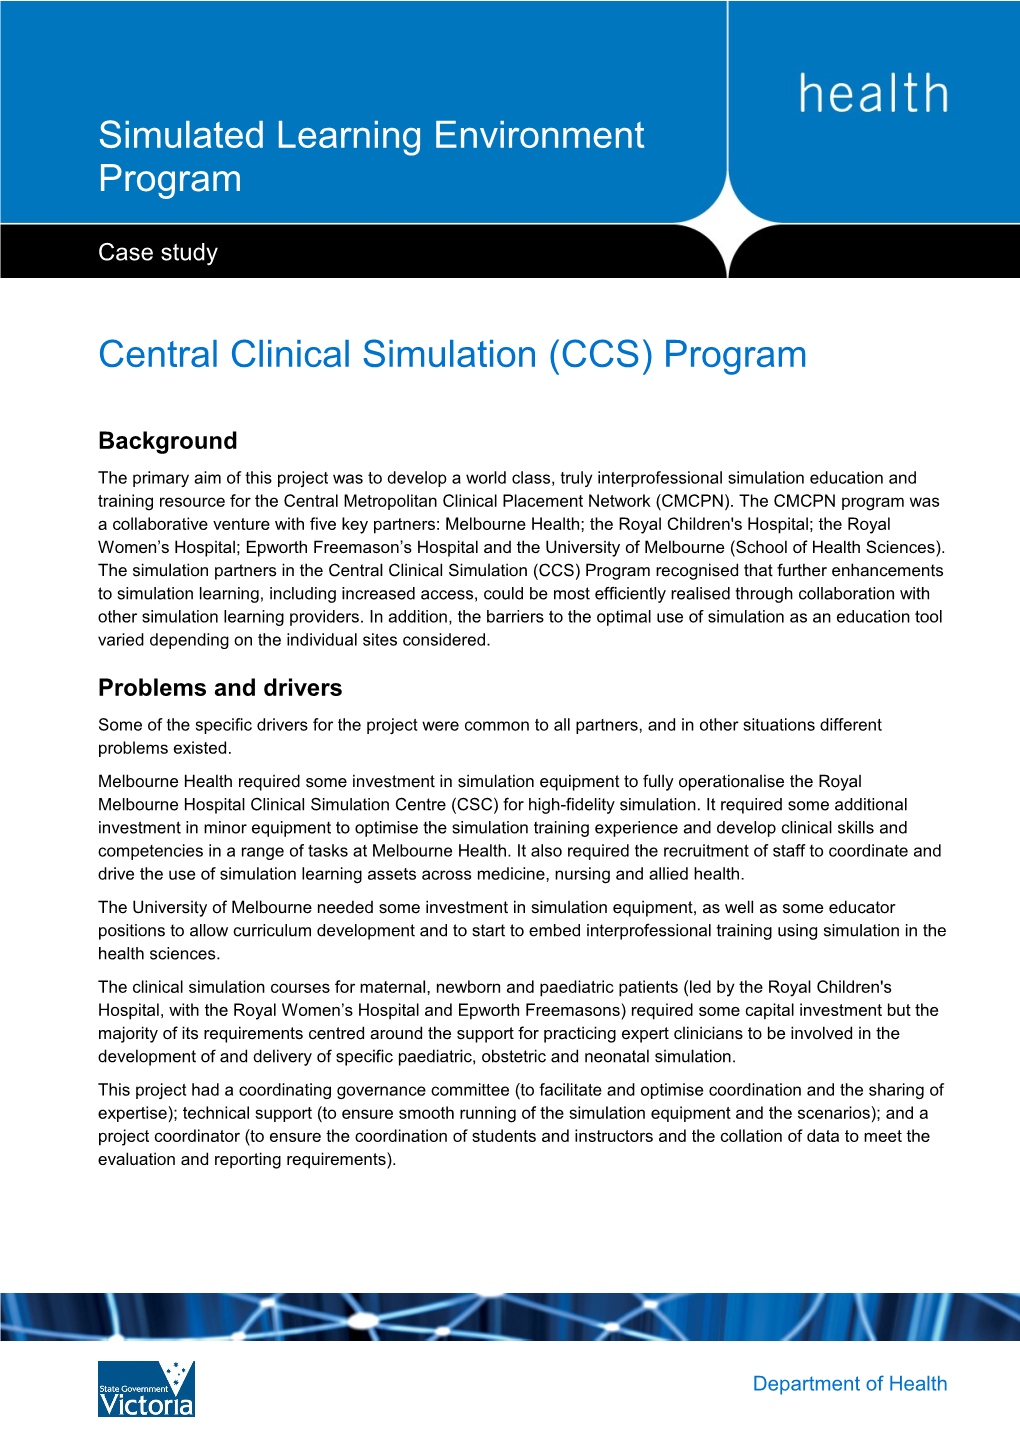 Central Clinical Simulation (CCS) Program